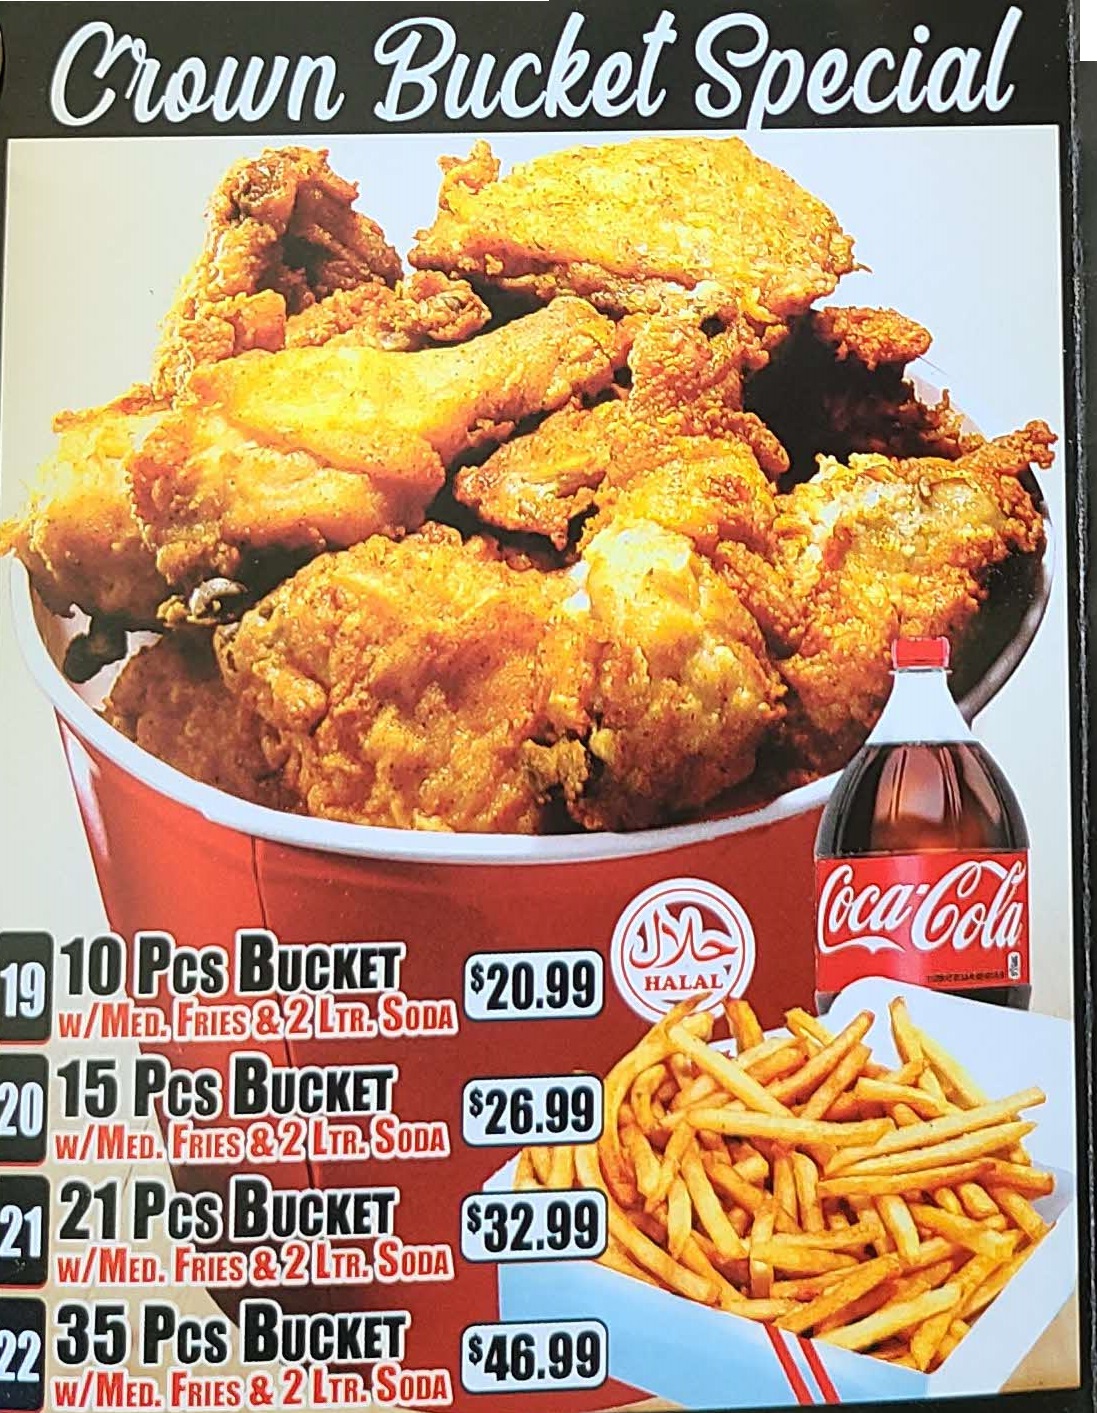 Crown Fried Chicken - Crown Bucket Special.jpg